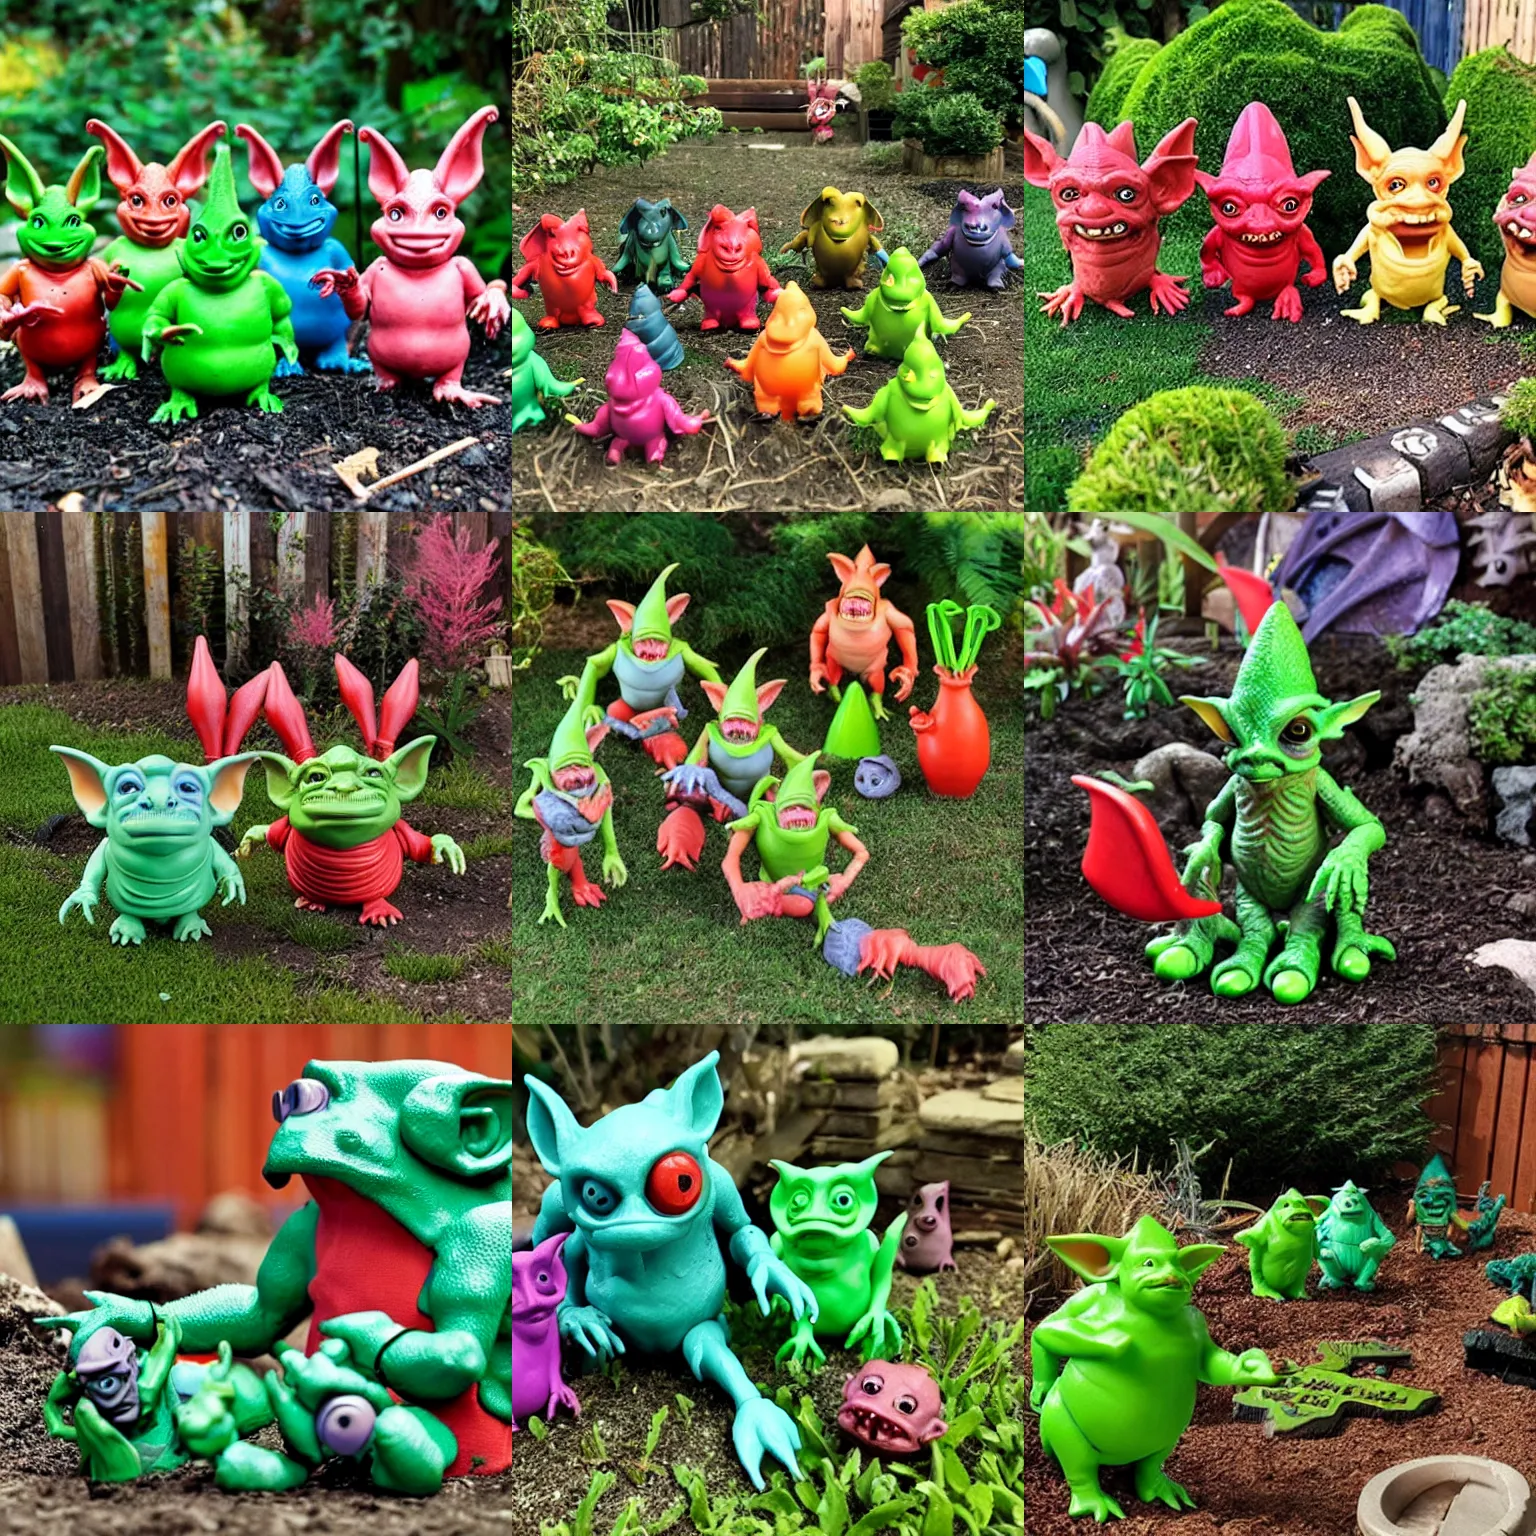 Prompt: Boglins, plastic goblin monster toys in a backyard garden